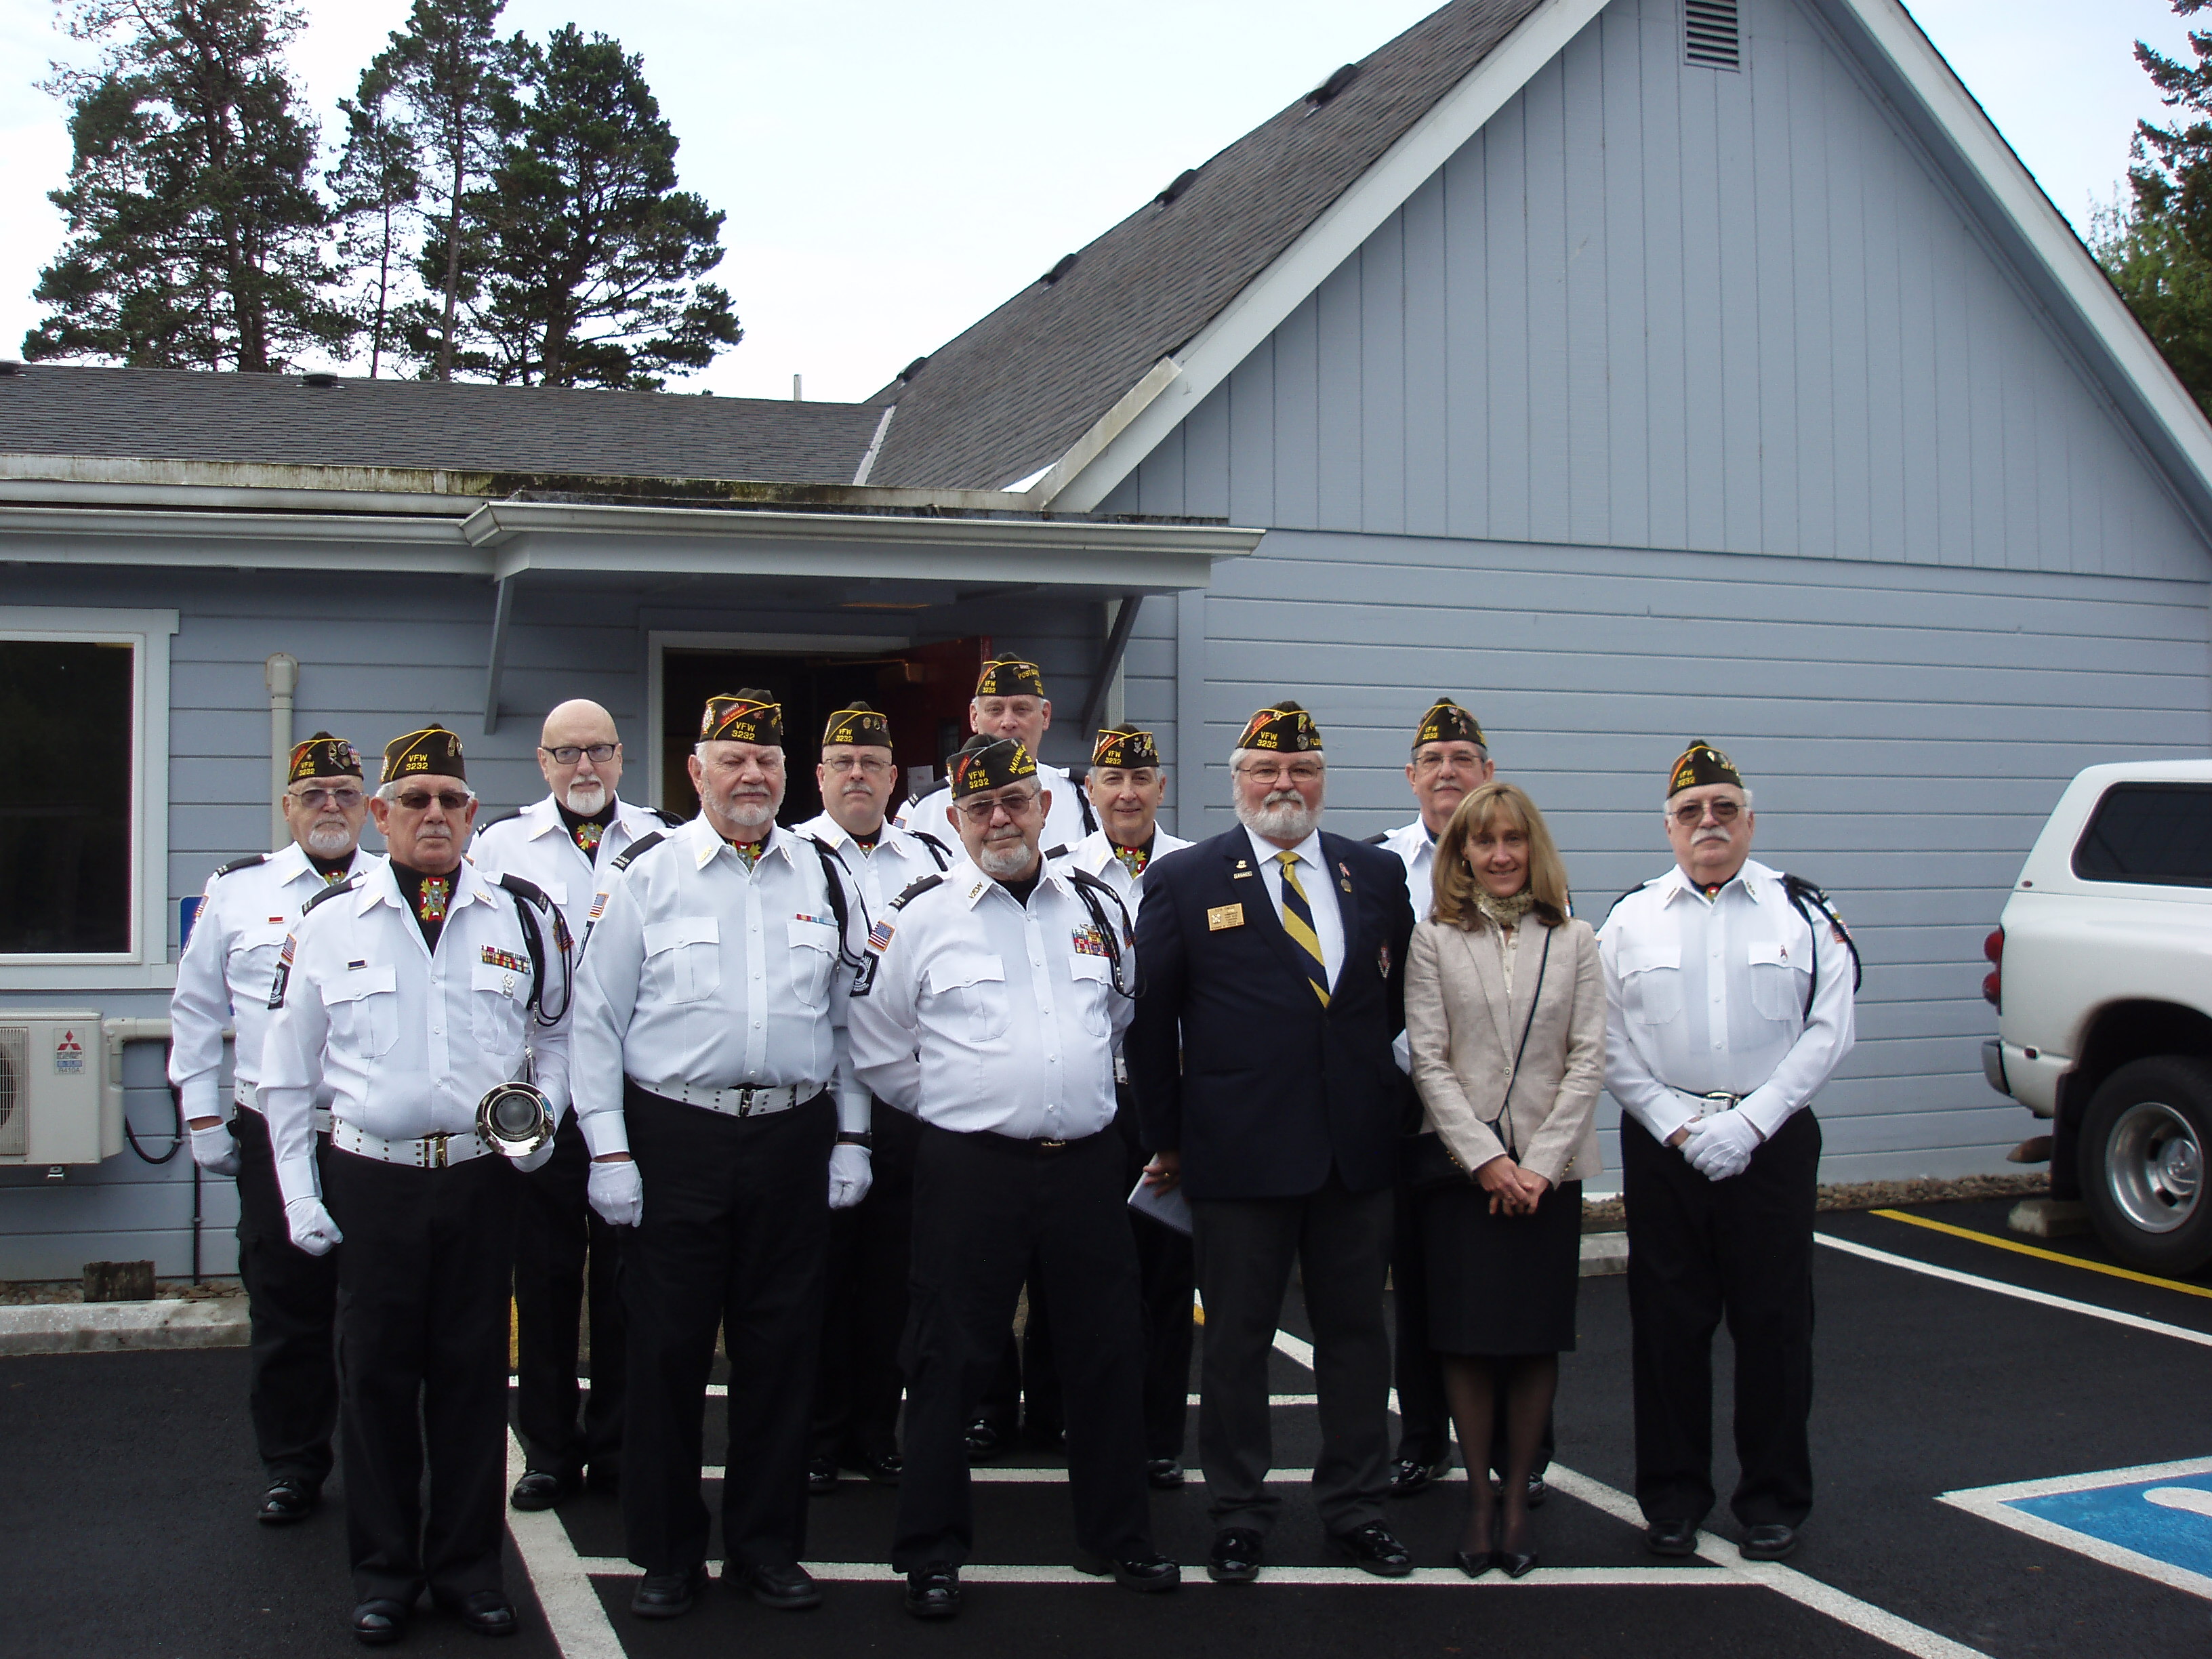 Post 3232 Honor Guard in attendance for a veteran's memorial service